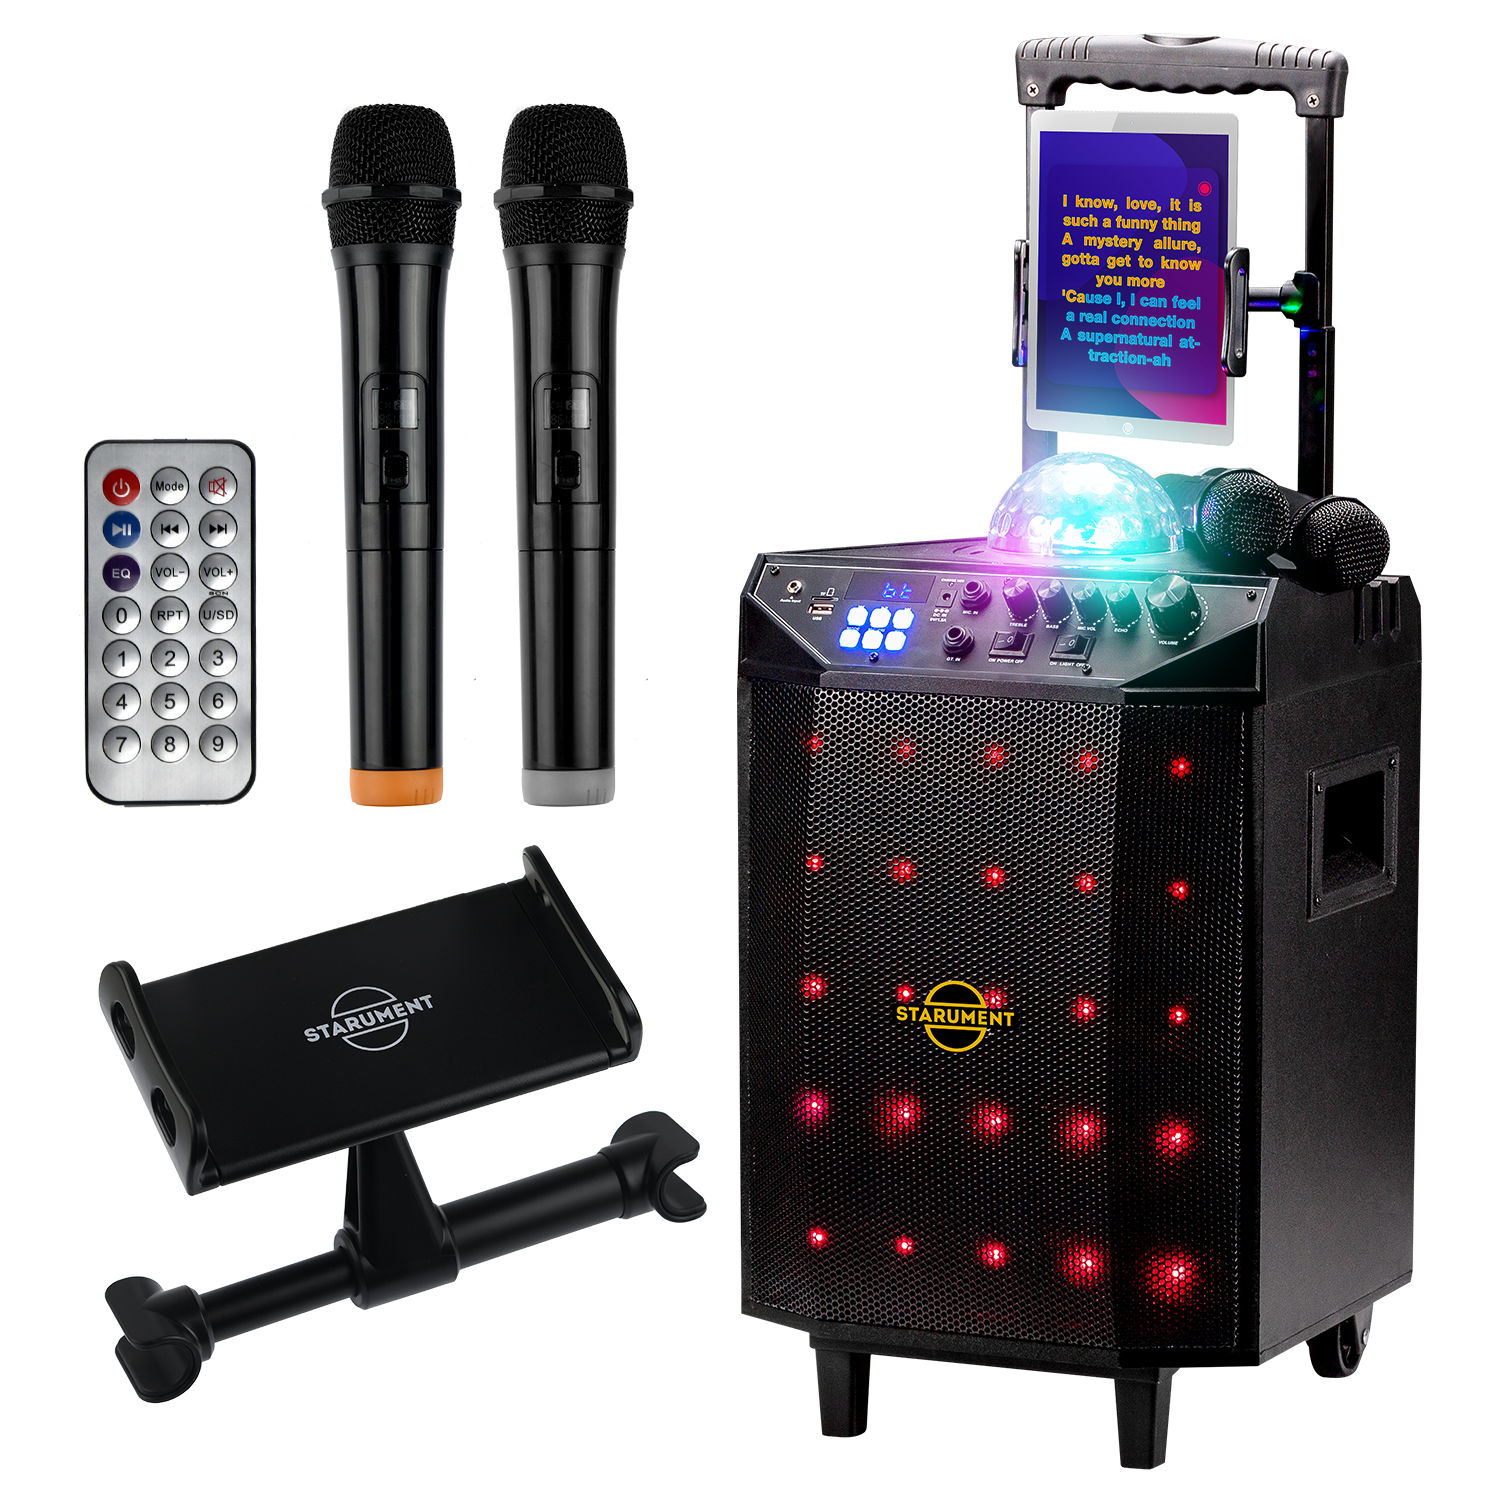 KaraoKing Karaoke Machine-Wireless Microphone Speaker with Disco Ball